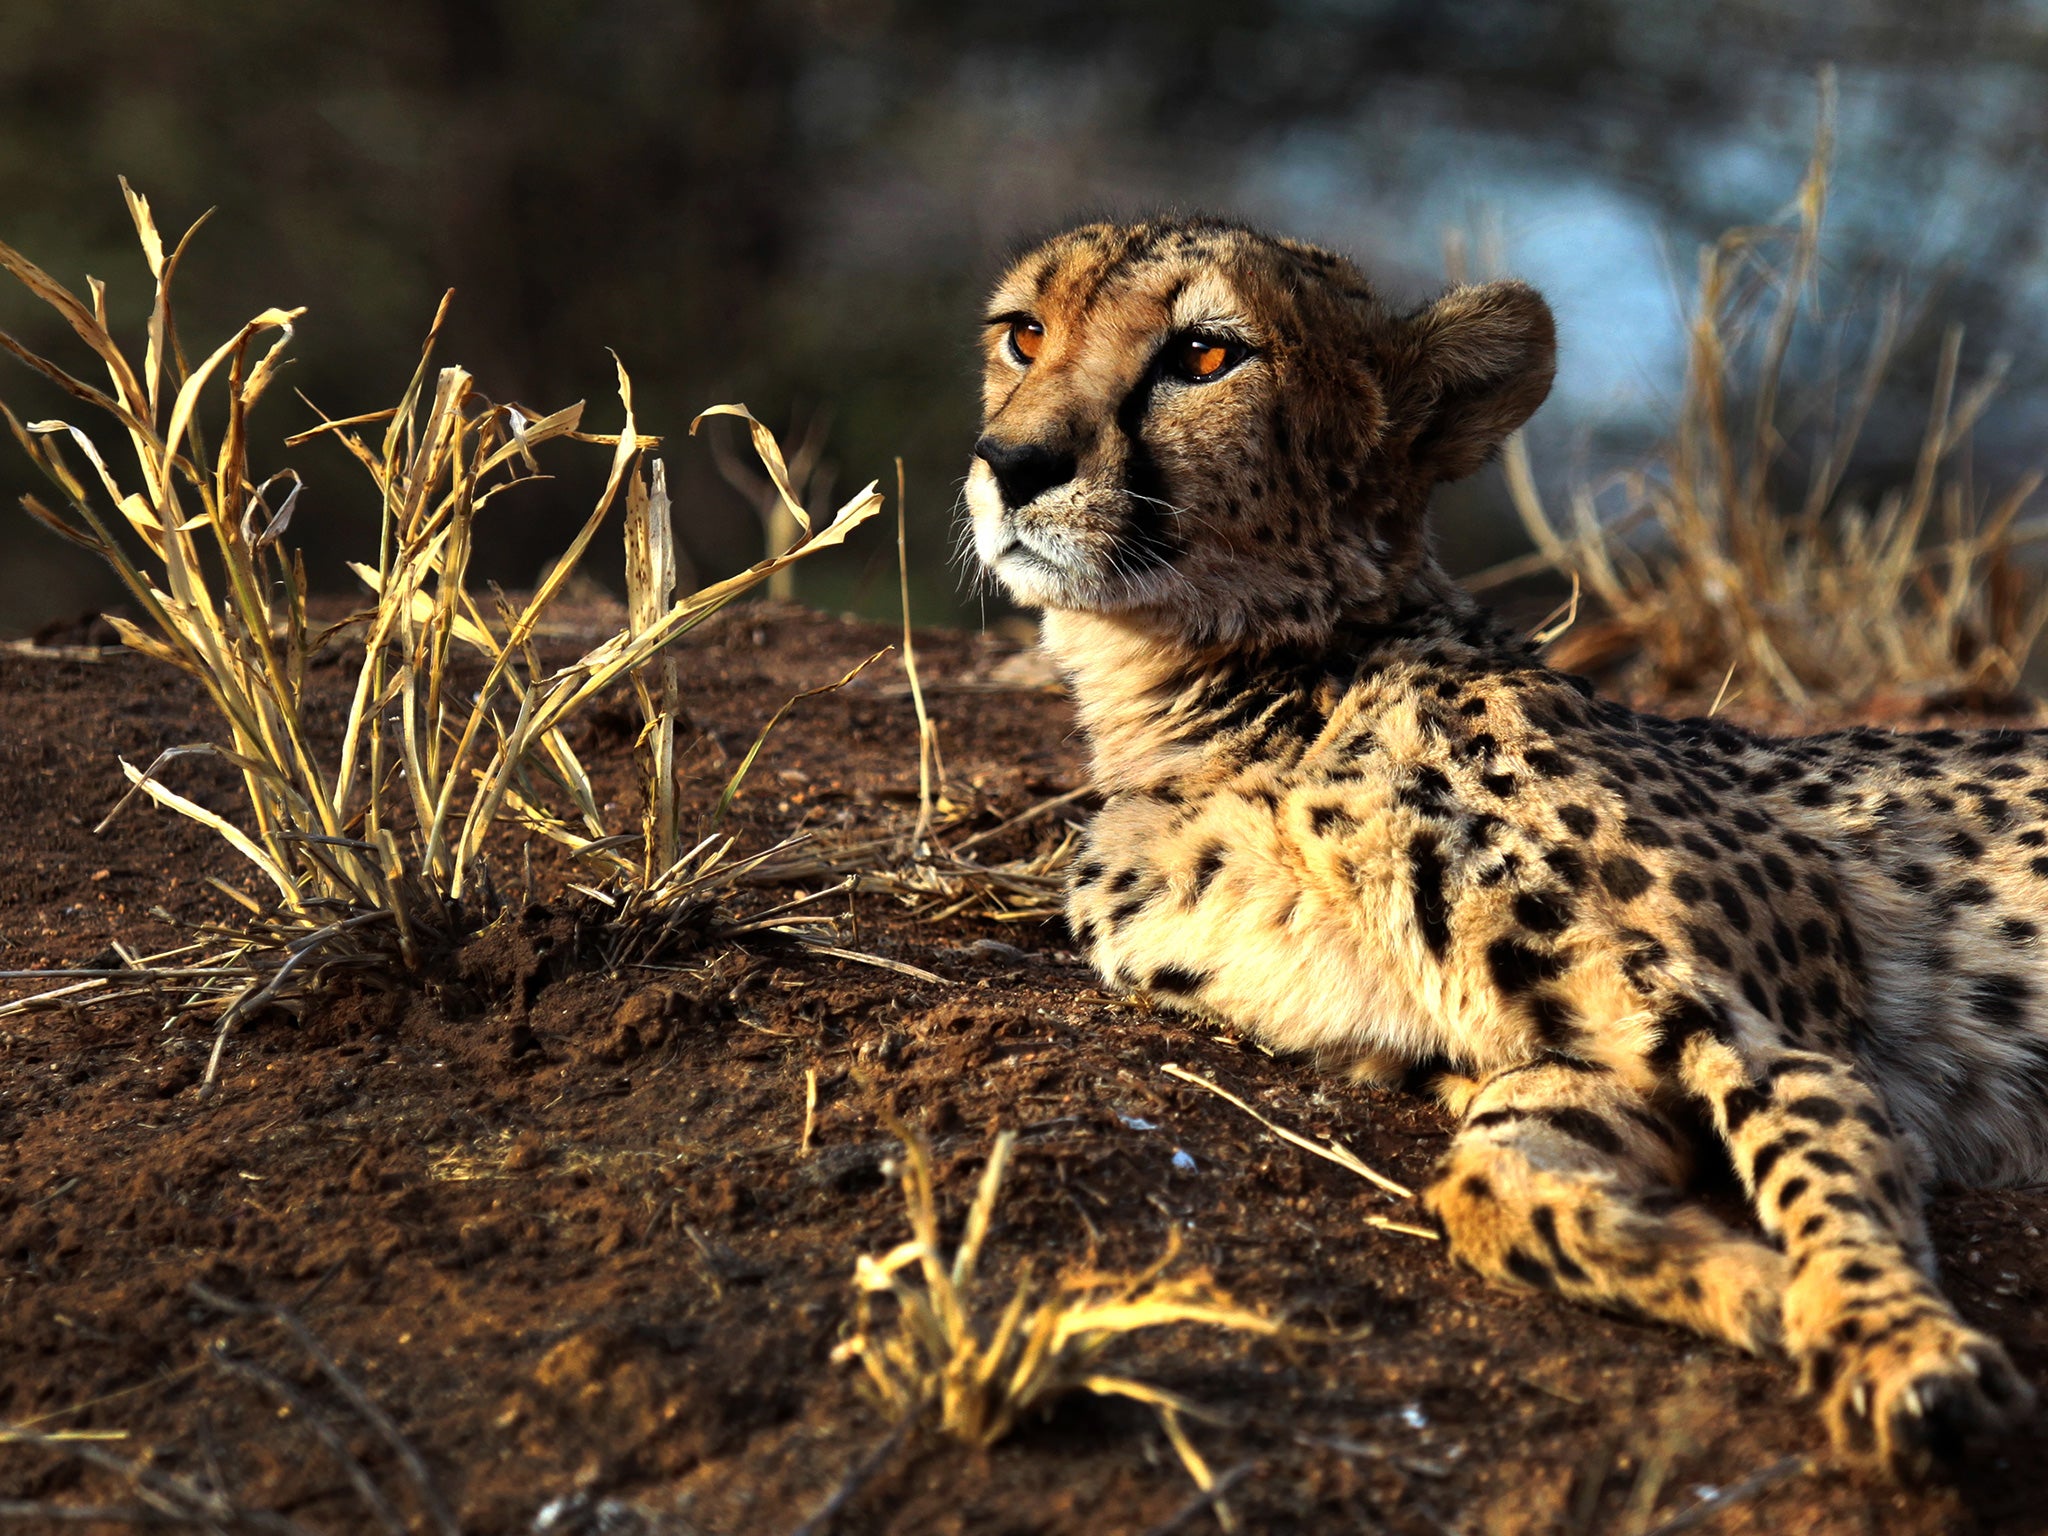 A cheetah lies at The Cheetah Conservation Fund (CCF) center in Otjiwarongo, Namibia